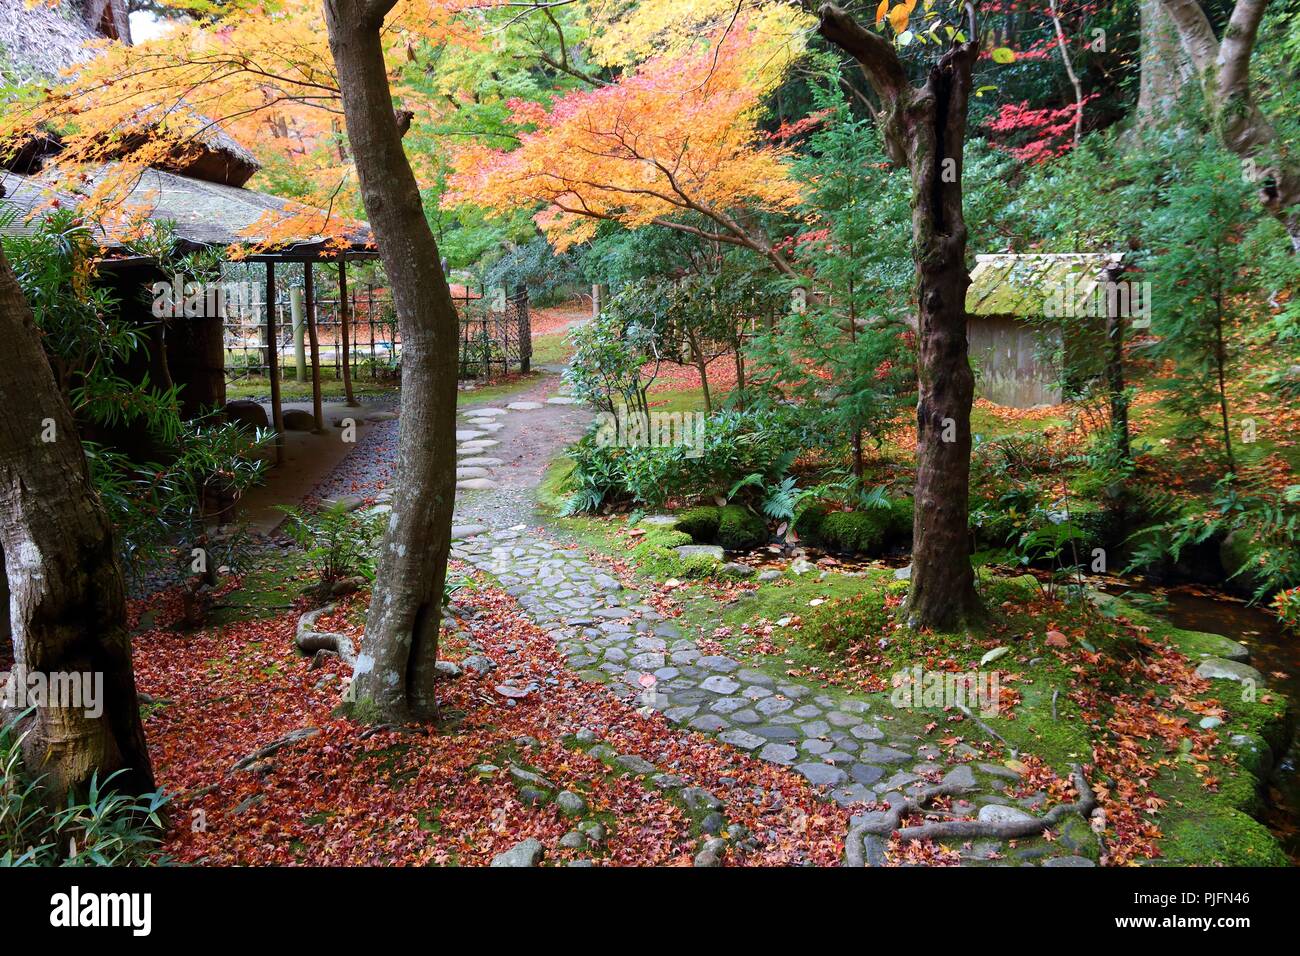 Autumn foliage moss garden in Japan - red momiji leaves (maple tree) in a Japanese tea garden of Yoshikien, Nara, Japan. Stock Photo